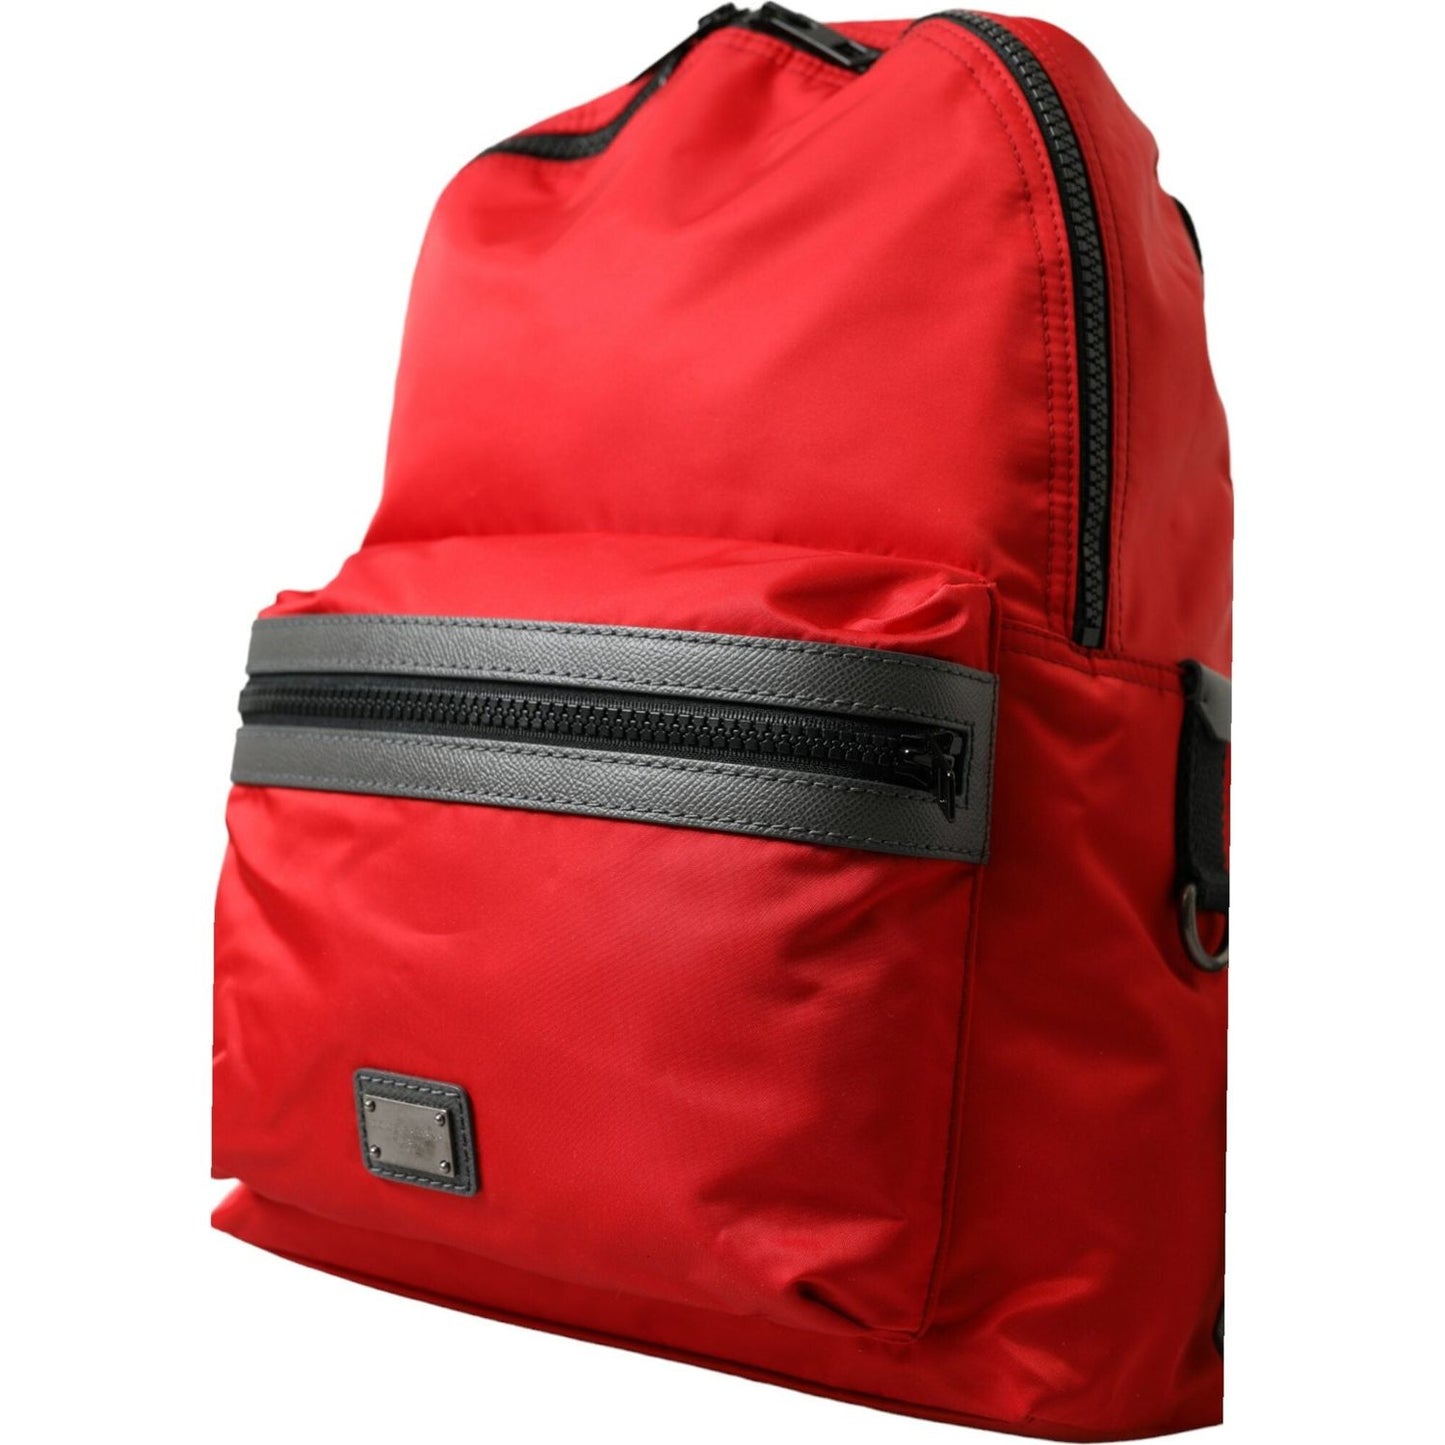 Dolce & Gabbana Elegant Red Nylon-Leather Backpack elegant-red-nylon-leather-backpack